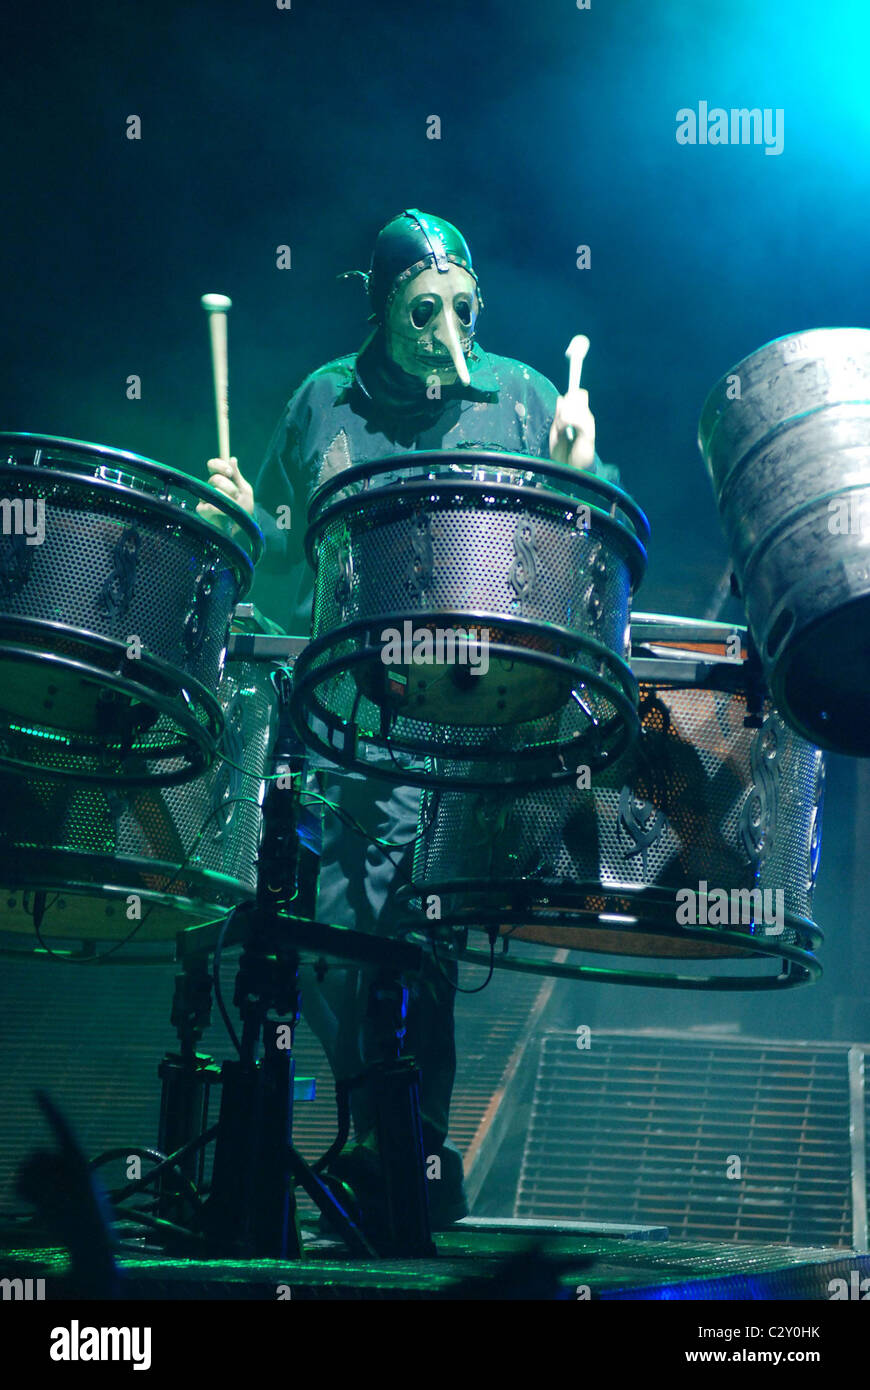 Grammy award-winning band Slipknot perform at the 2008 Rockstar Energy Drink Mayhem Festival Tinley Park, Illinois - 10.08.08 Stock Photo